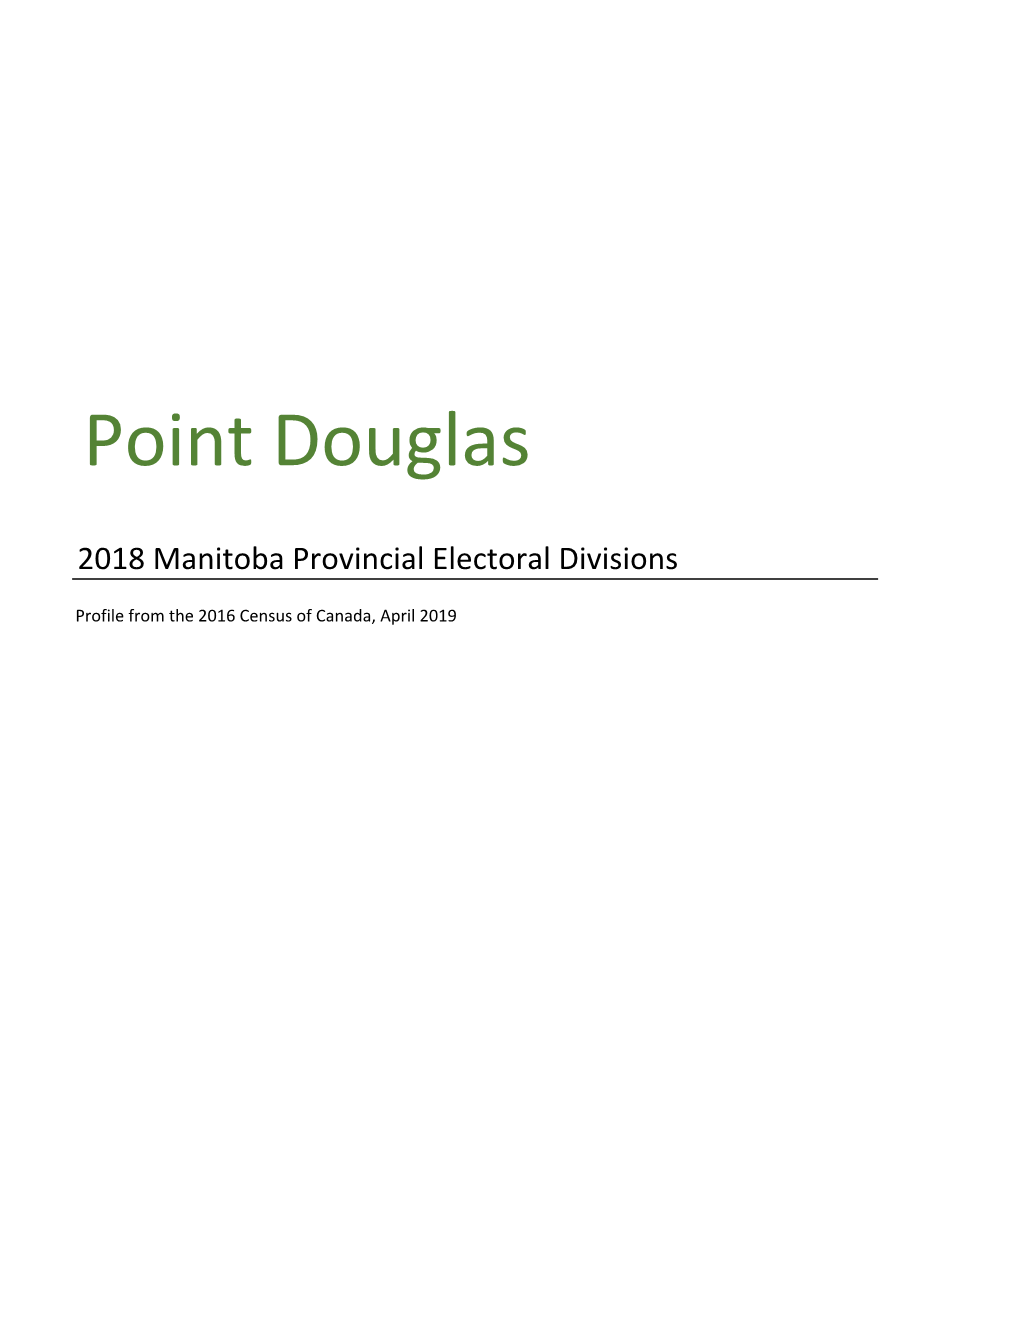 Point Douglas